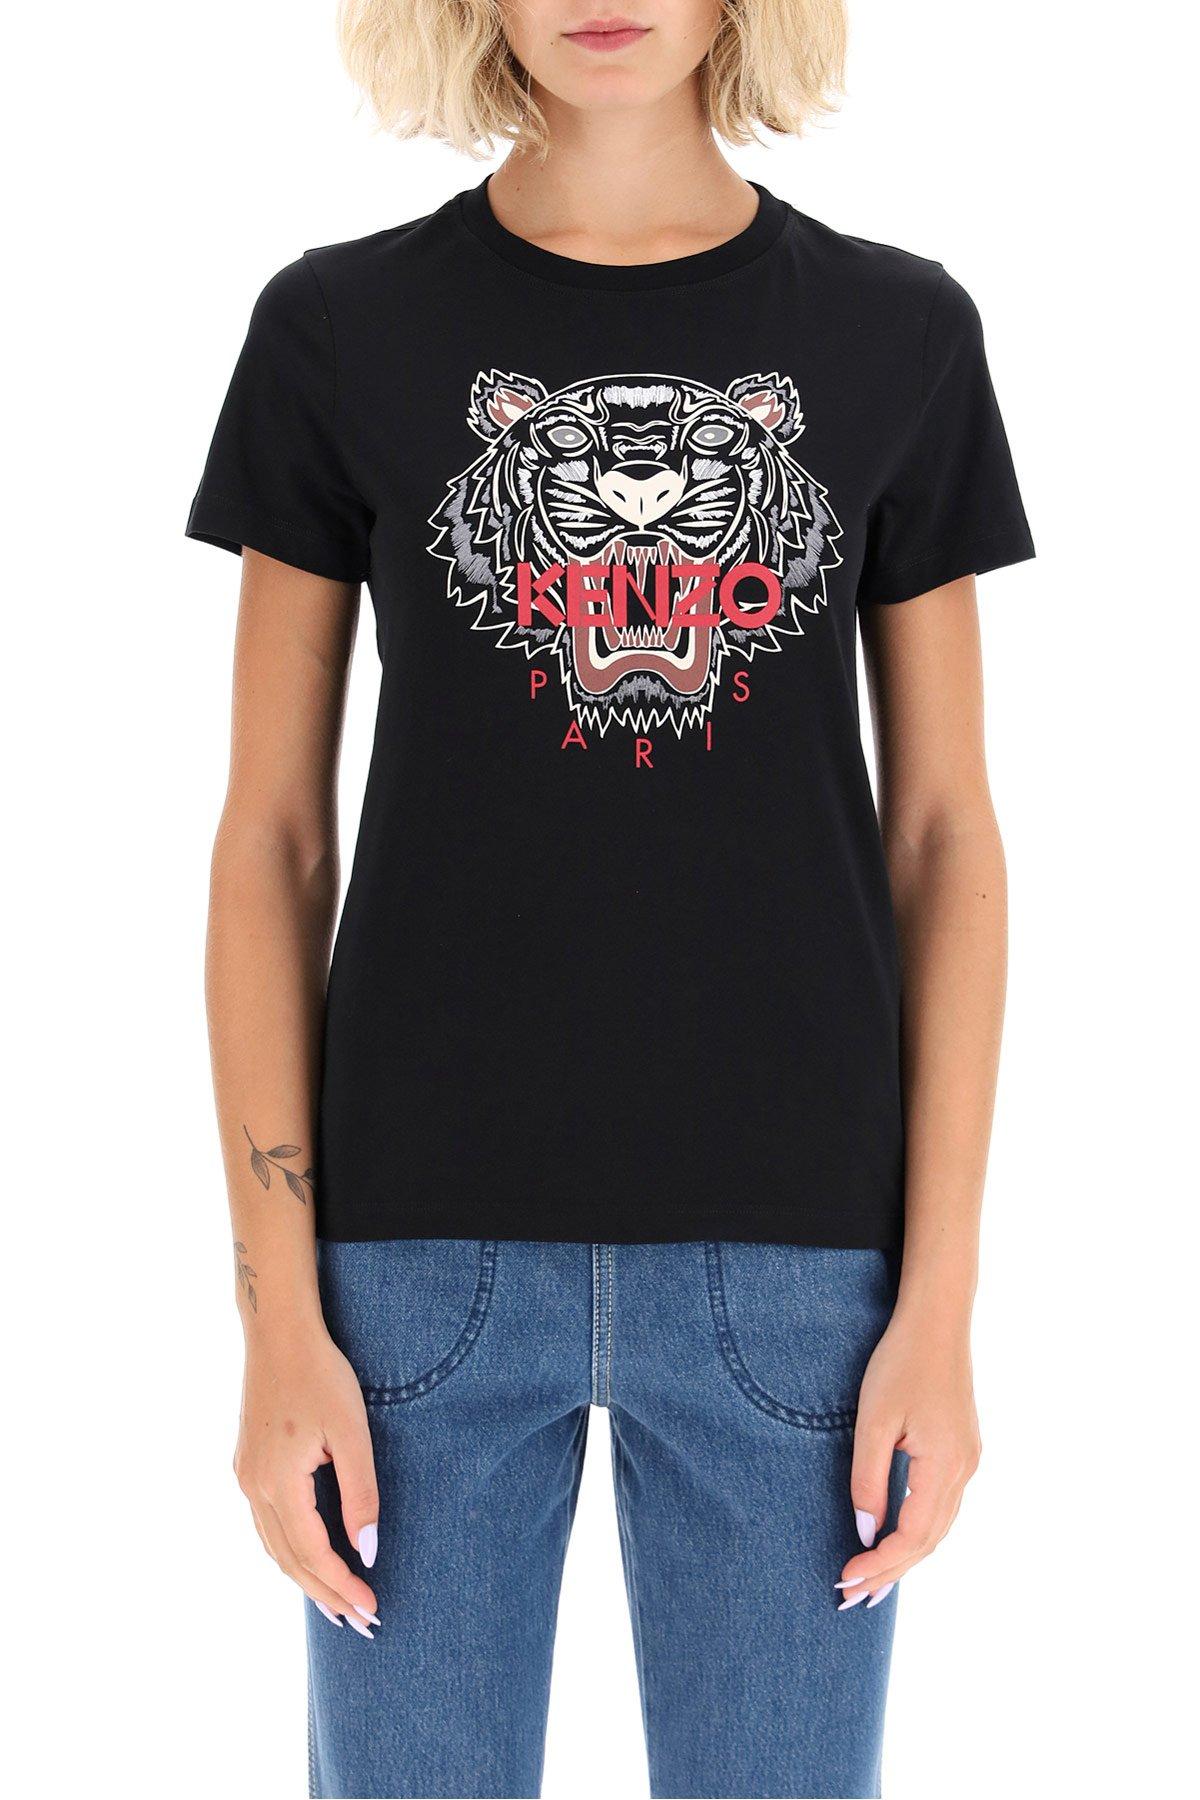 KENZO Cotton Tiger Print T-shirt in m (Black) - Lyst